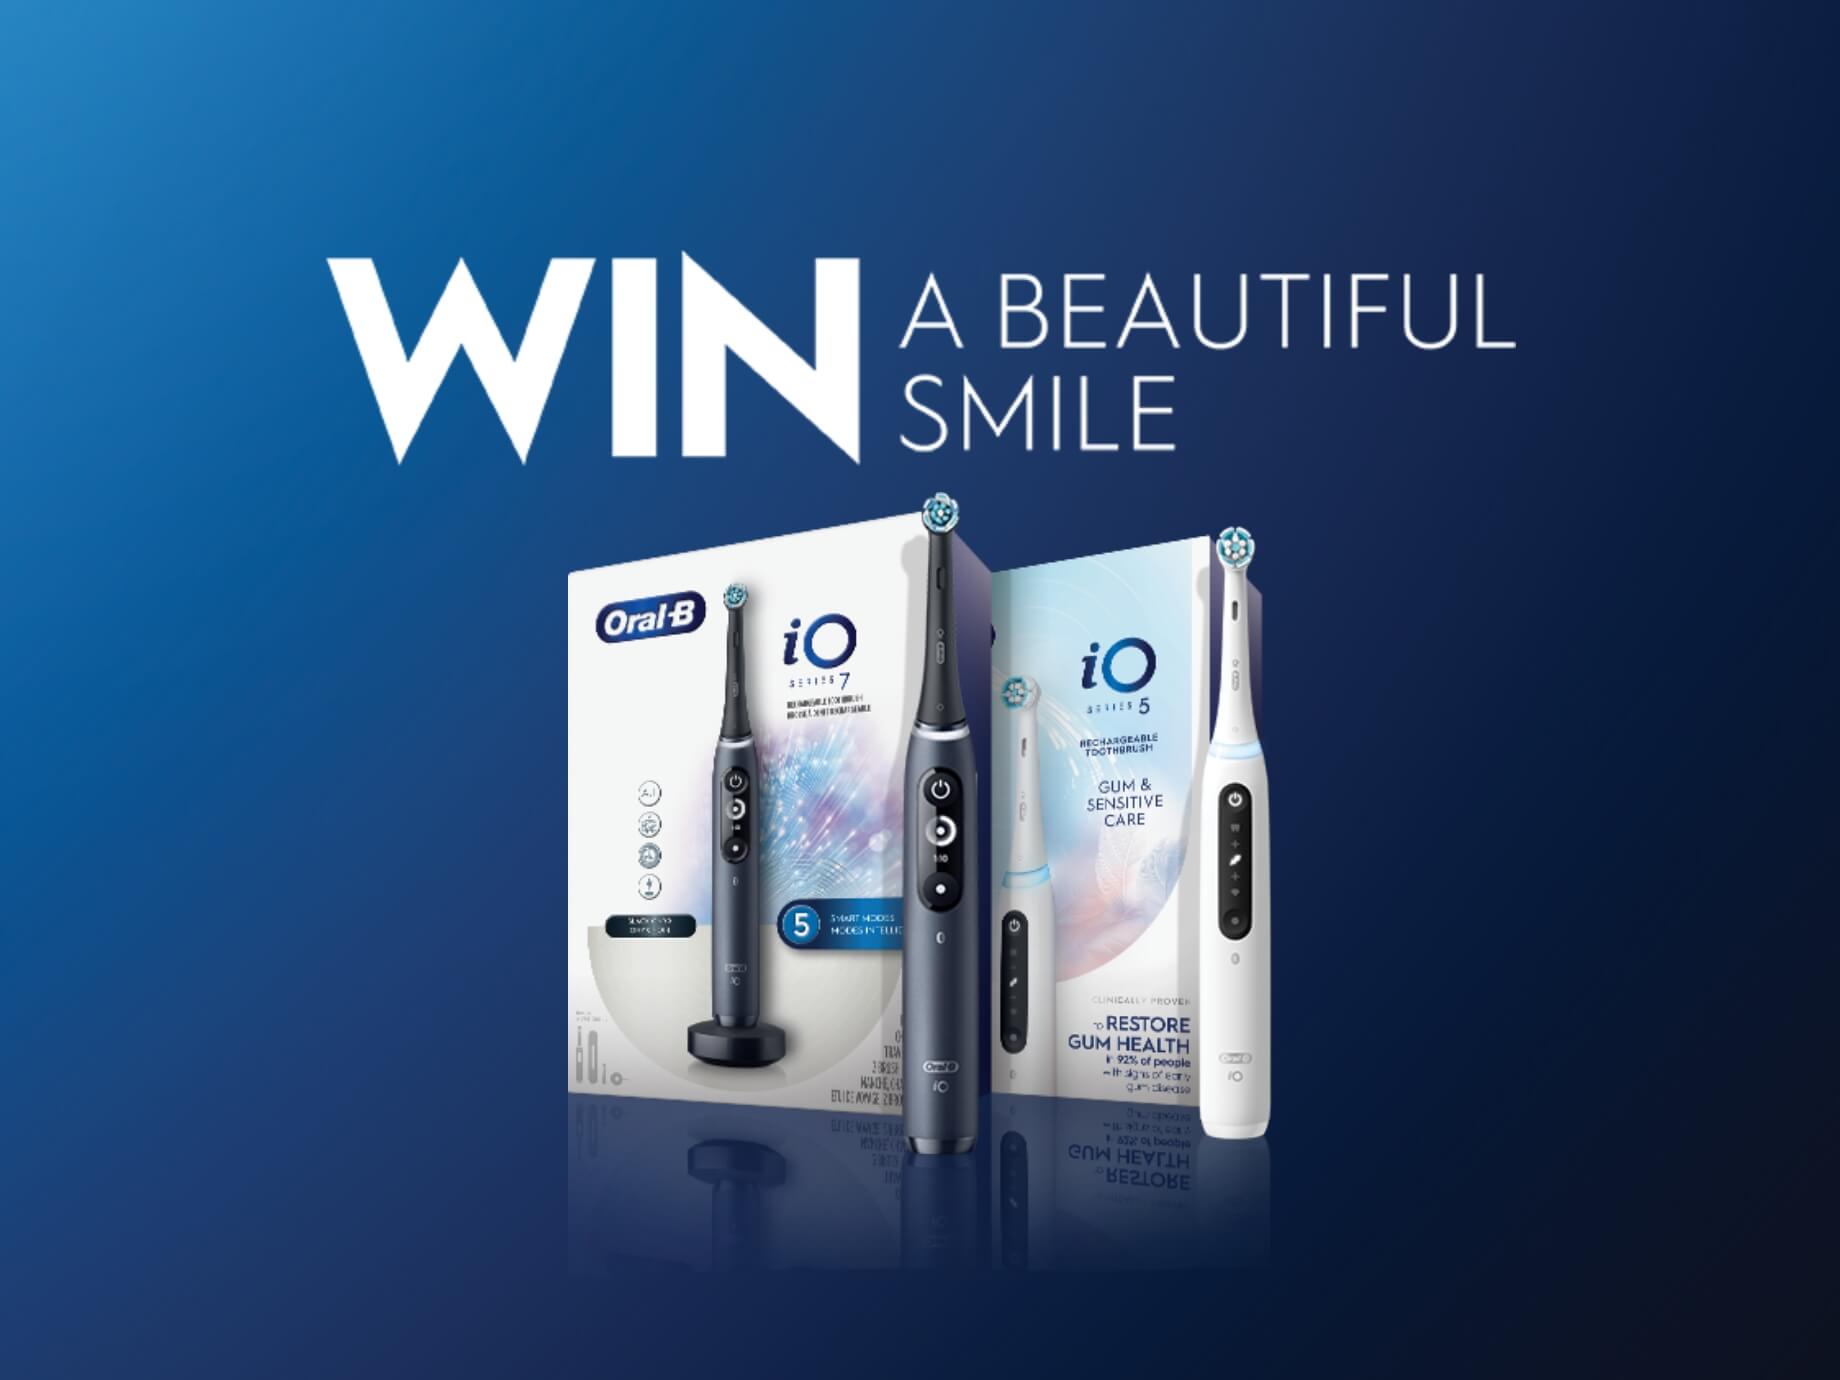 Contest- Win a beautiful smile